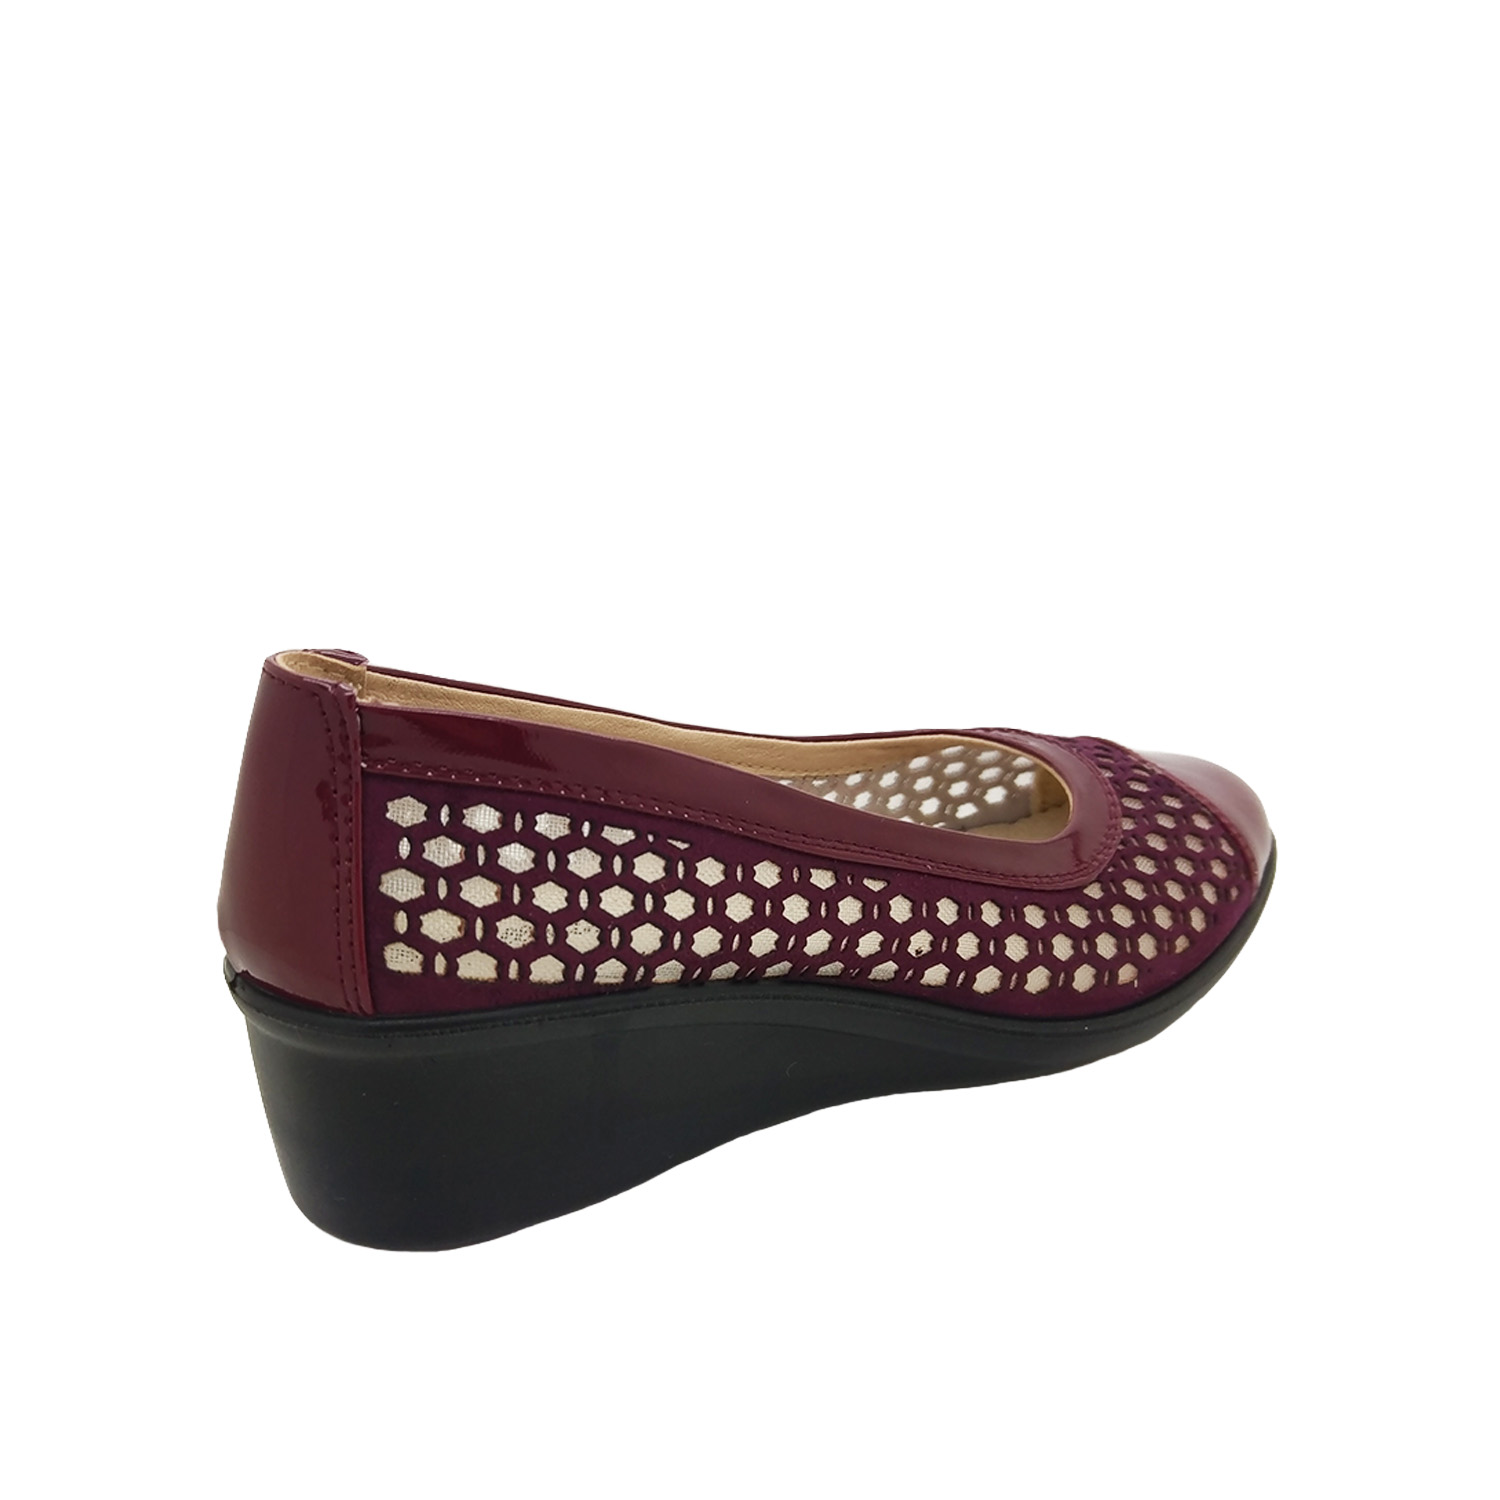 Bellissimo Claudia Ladies Shoes Dressy Shoe Slip On Wedge Light | eBay